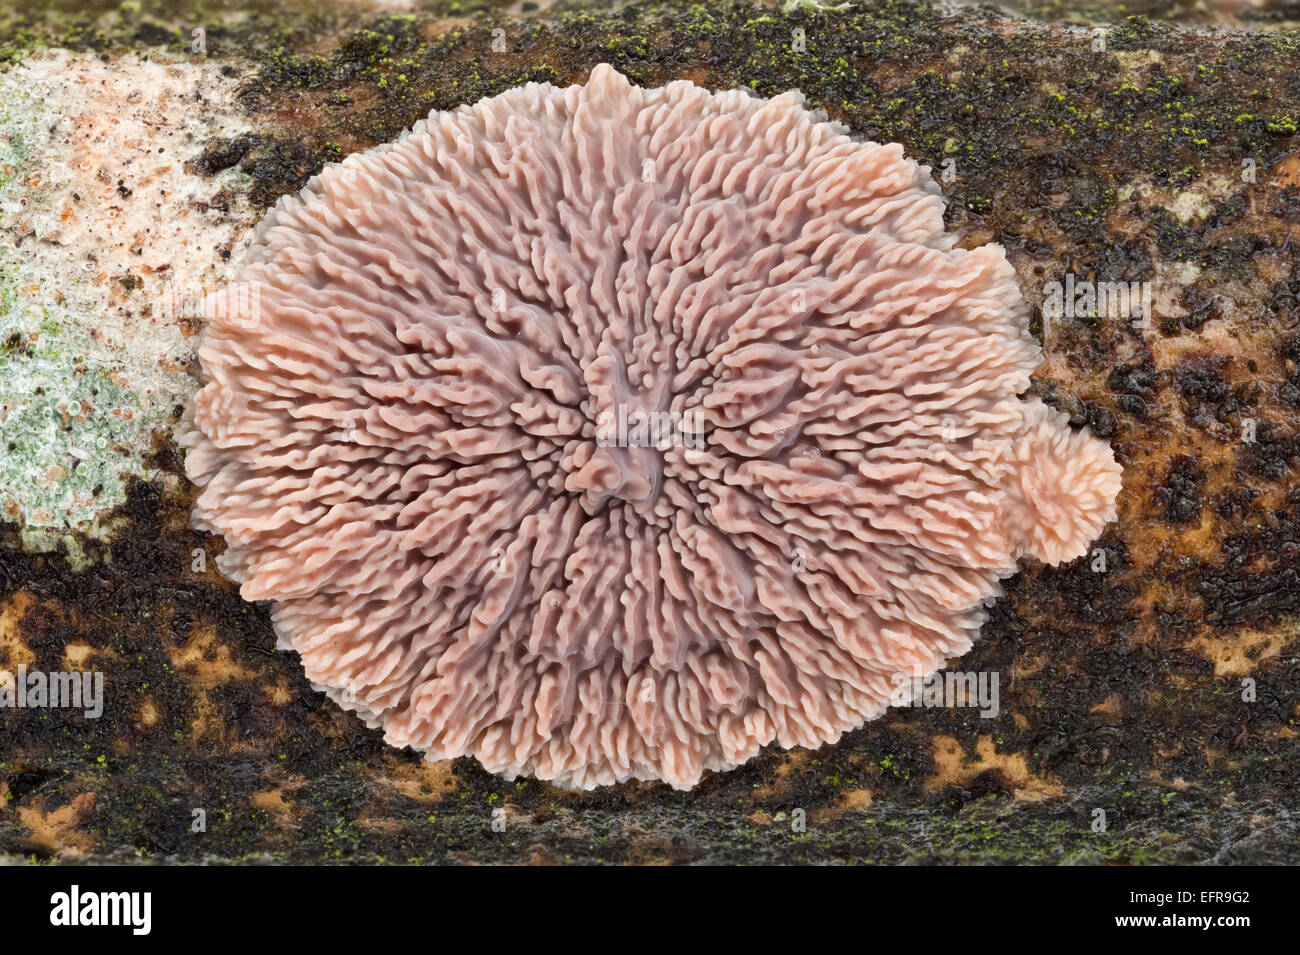 Wrinkled Crust fungus Stock Photo